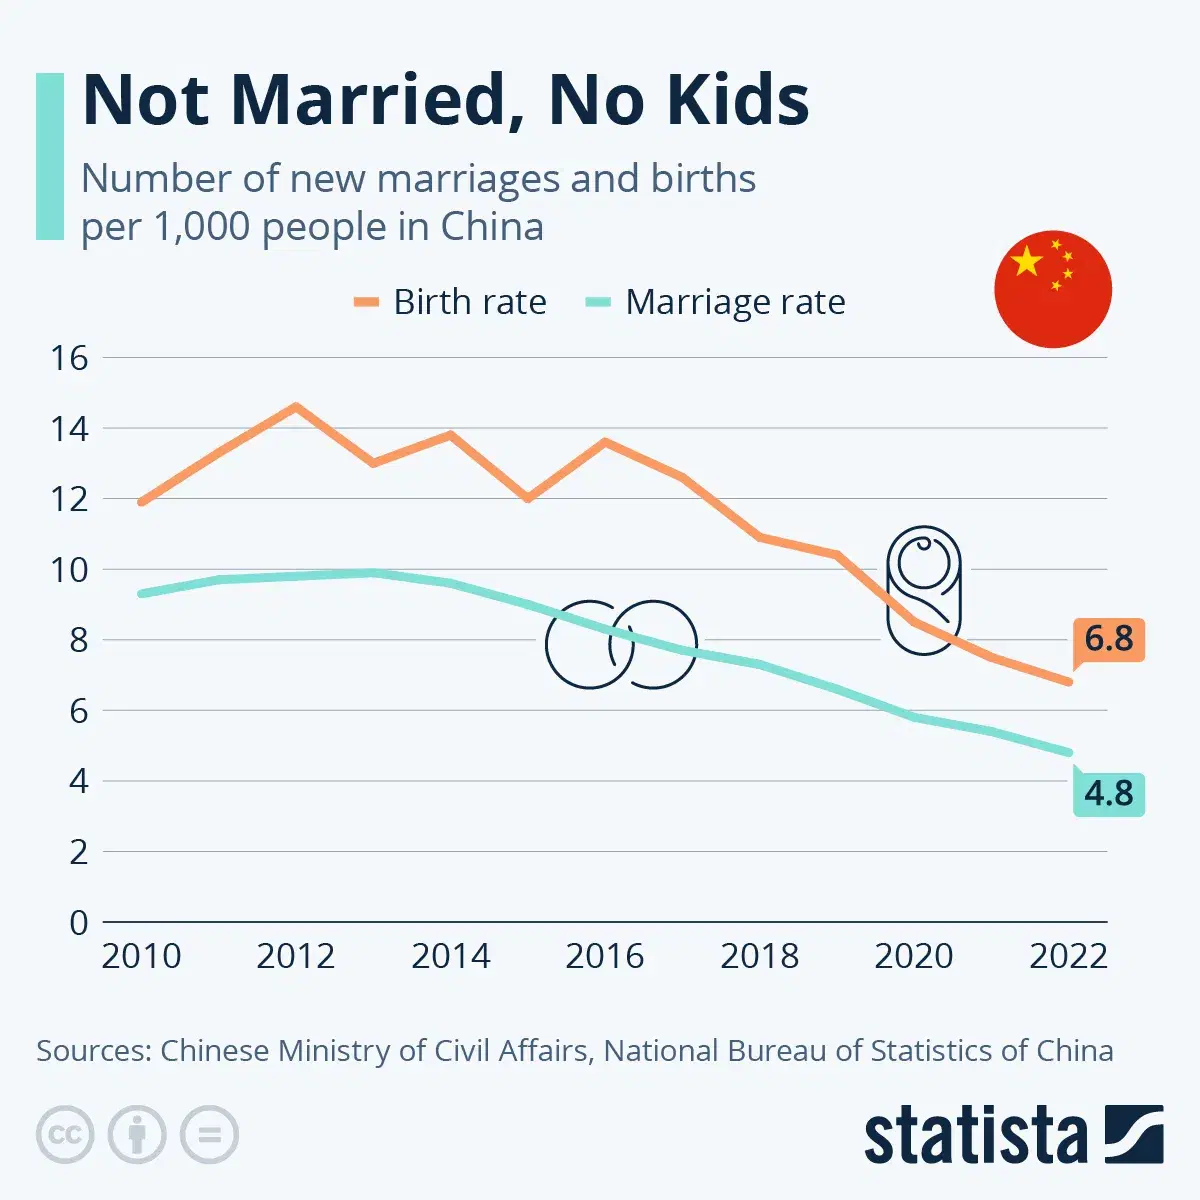 China's Shifting Demographics: Not Married, No Kids